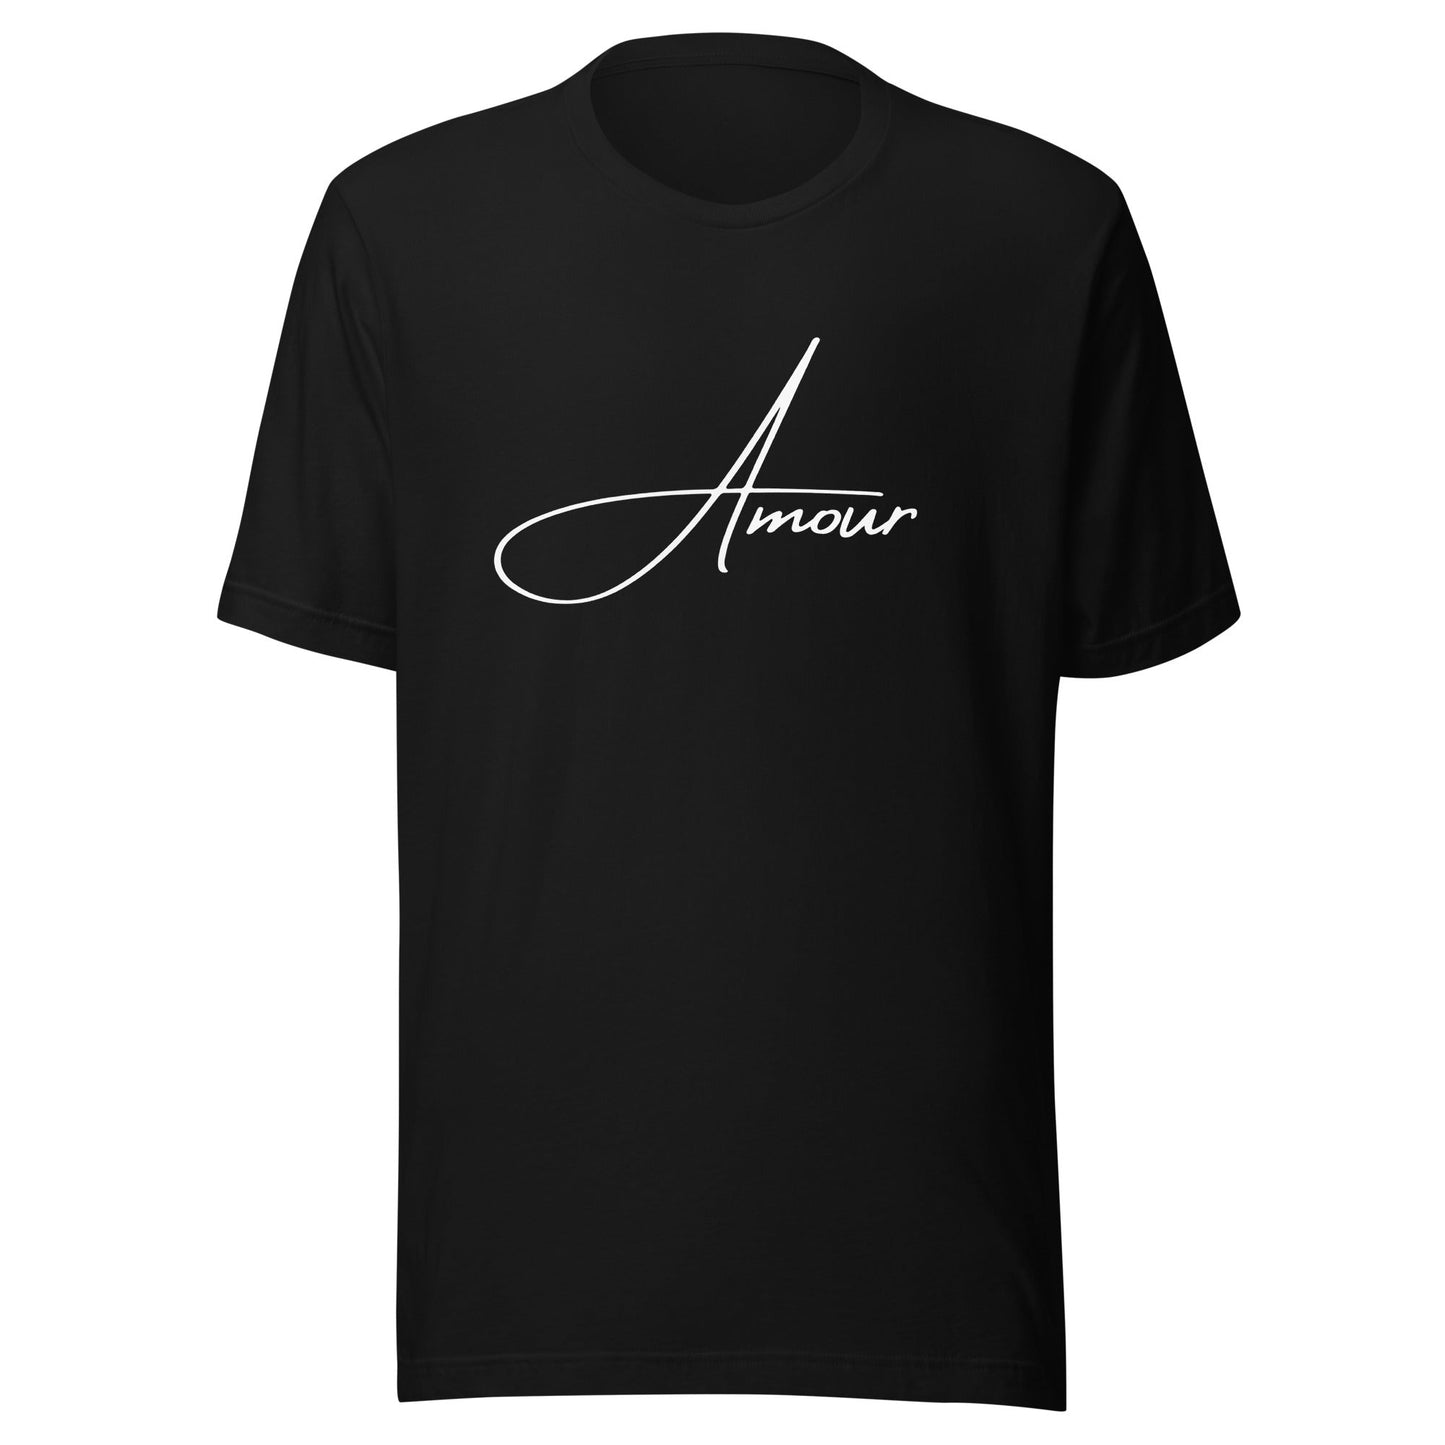 Amour - Unisex t-shirt - lilaloop - T-shirt